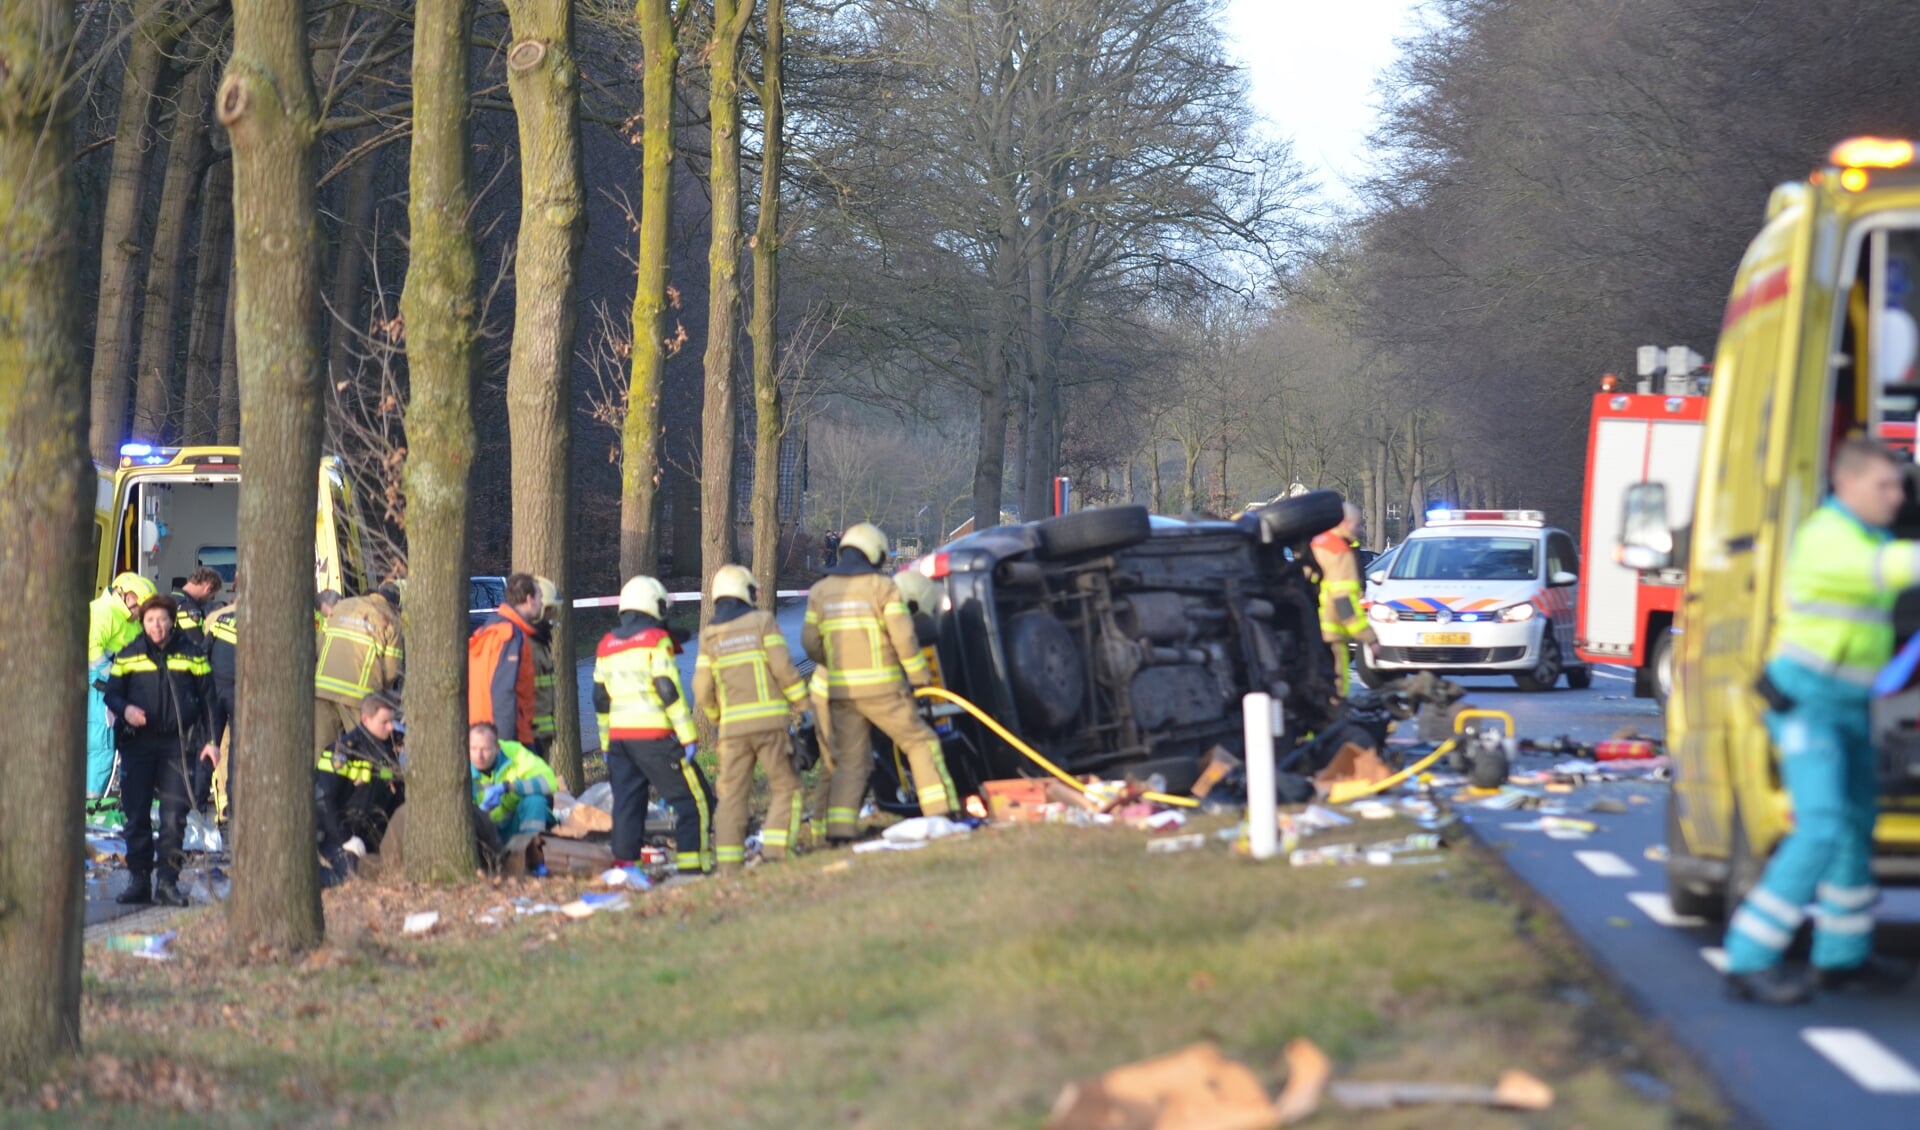 Ernstig ongeval op N346 bij Warnsveld. Foto: GinoPress B.V.